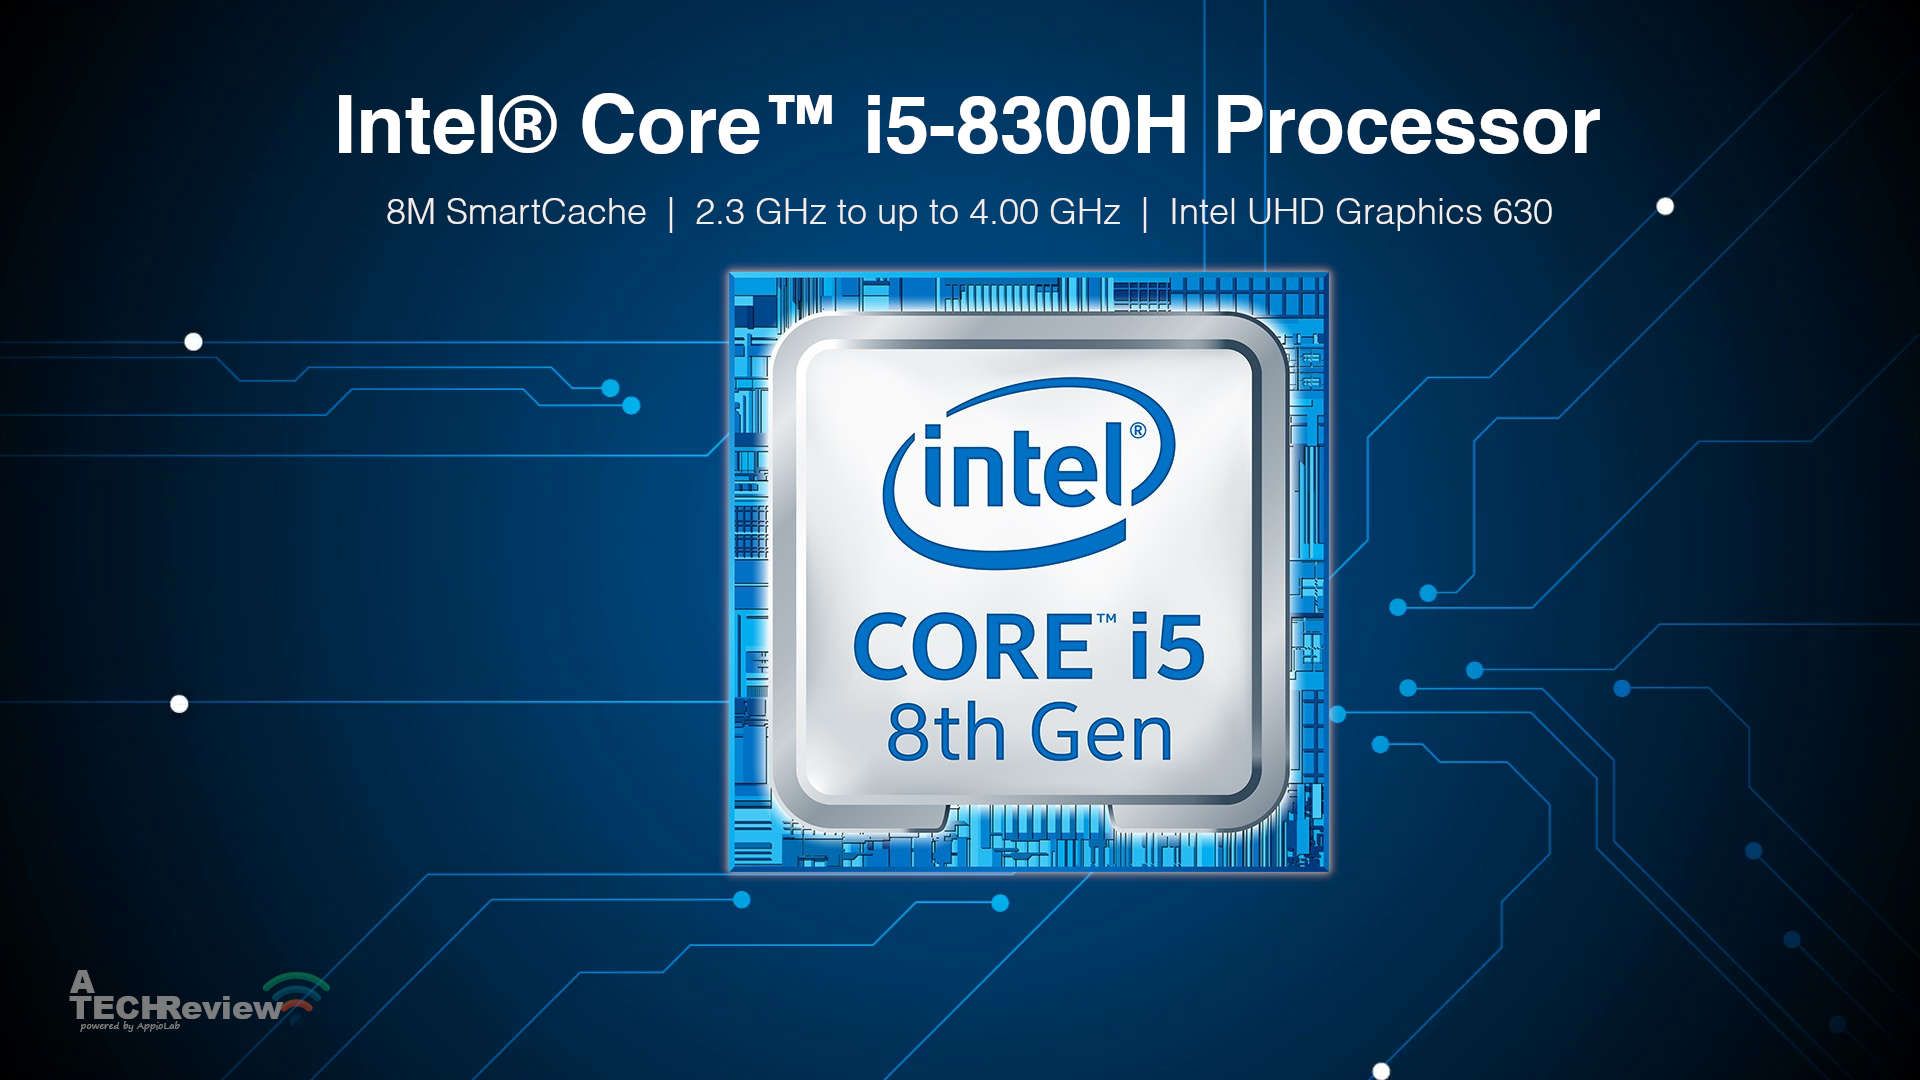 Intel Core I5 8300h Processor Overview